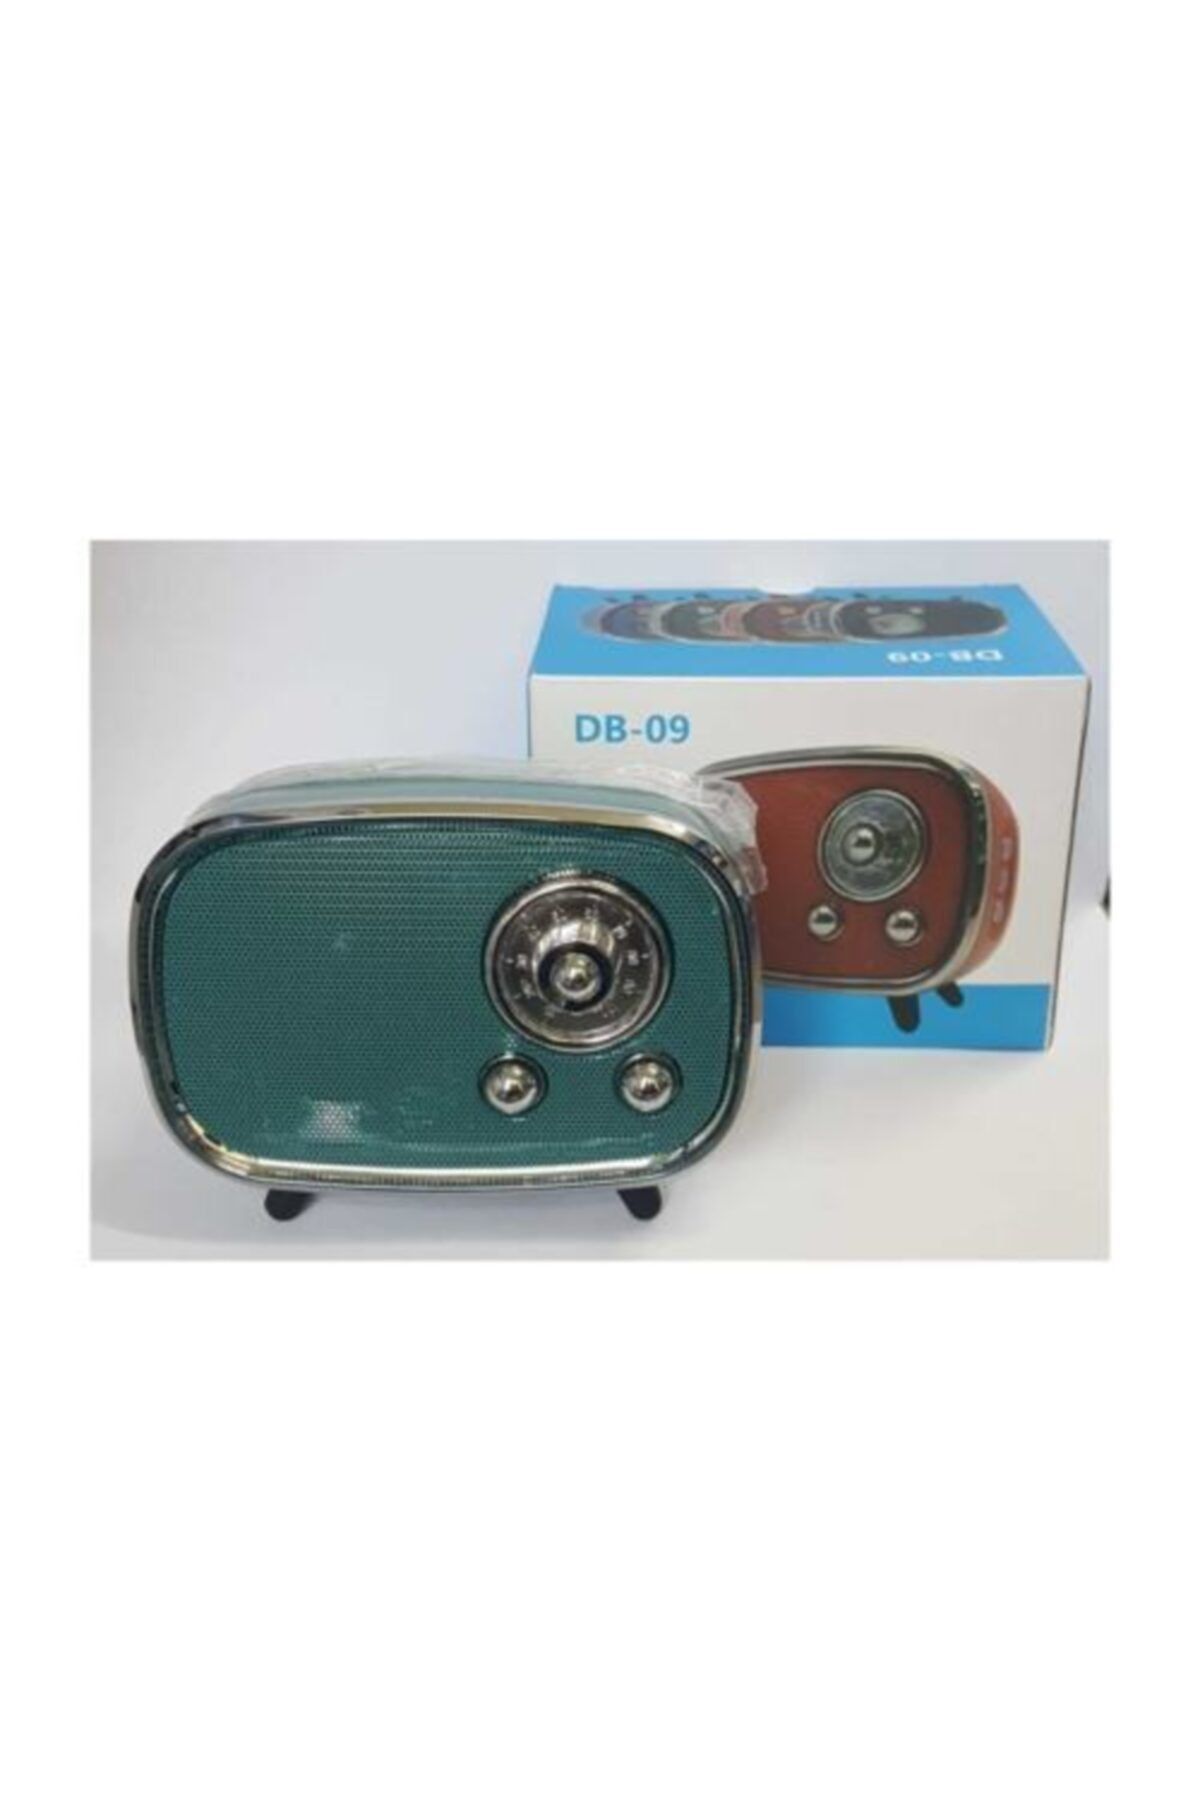 JUNGLEE Db-09 Mini Retro Style Bluetooth Hoparlör Fm Radyo Sd Kart Ve Usb Girişli Speaker Yeşil